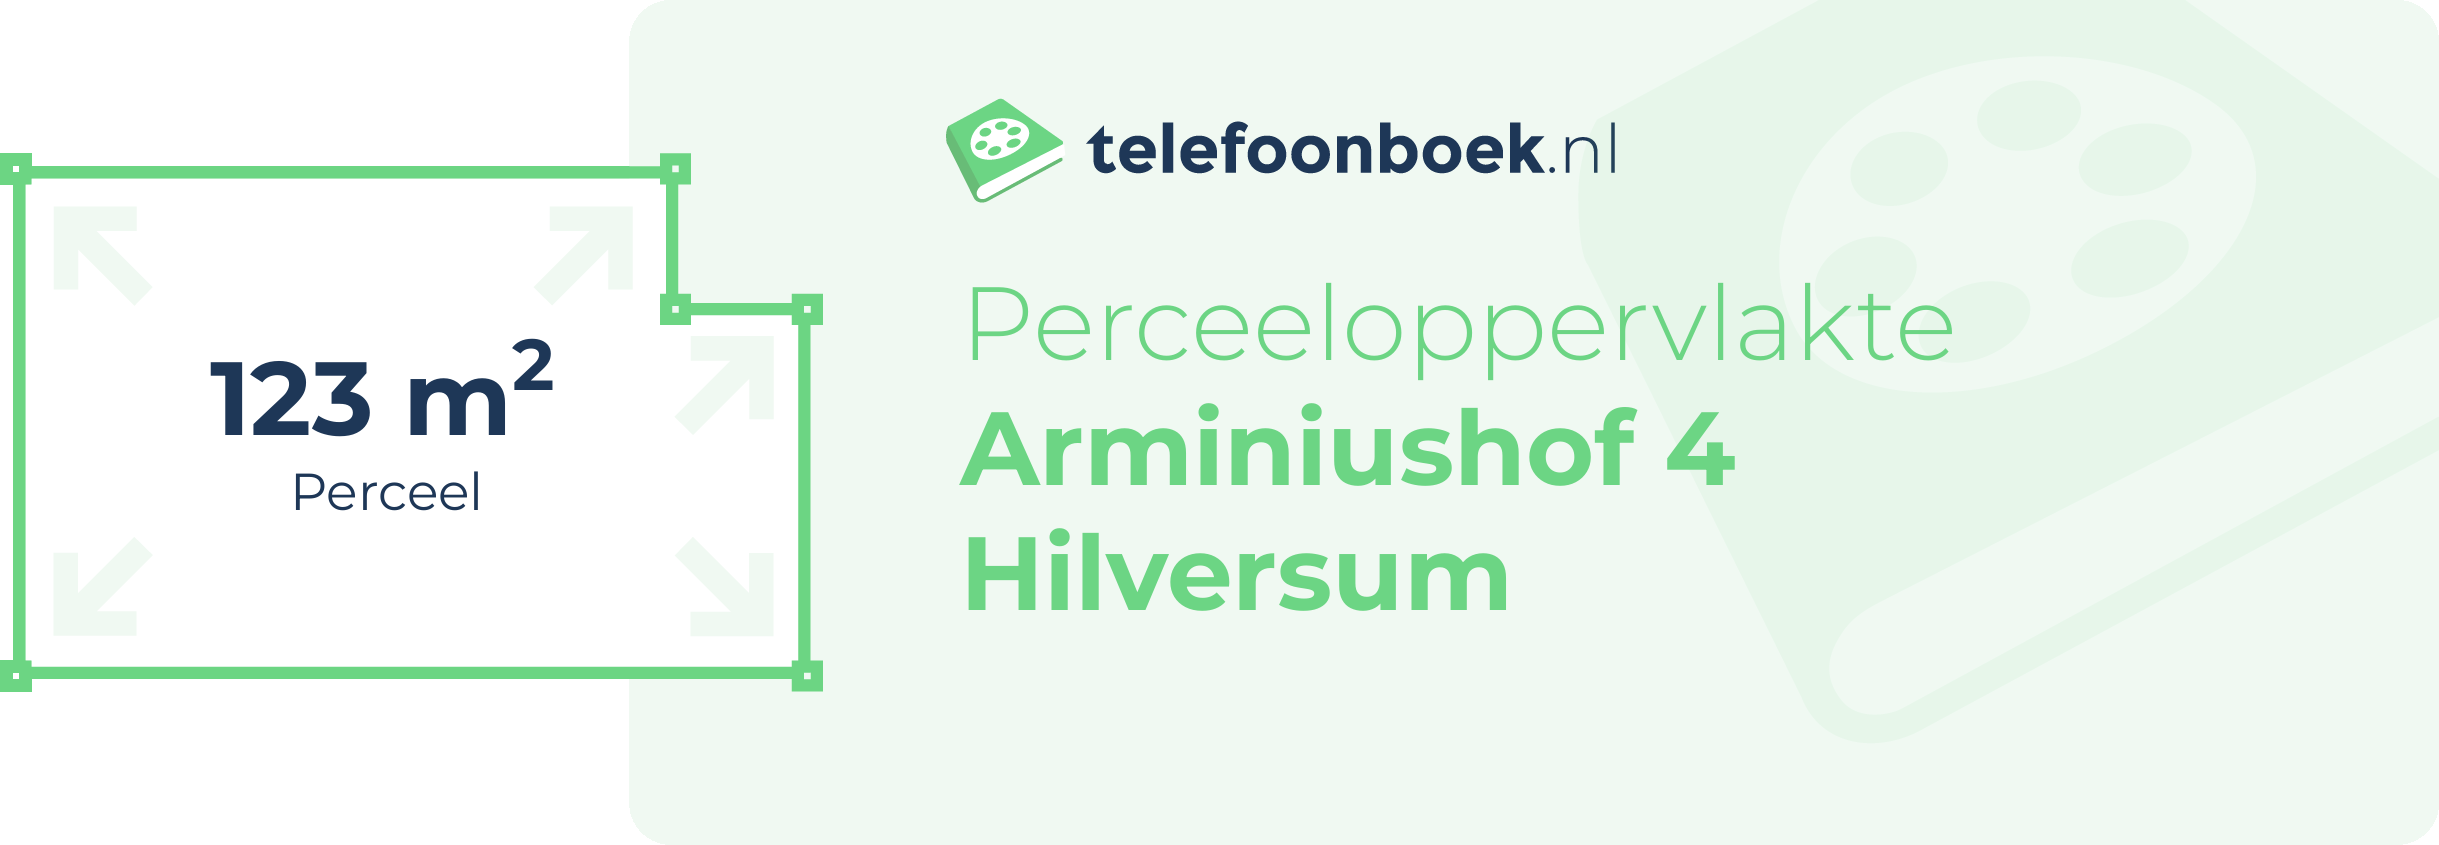 Perceeloppervlakte Arminiushof 4 Hilversum